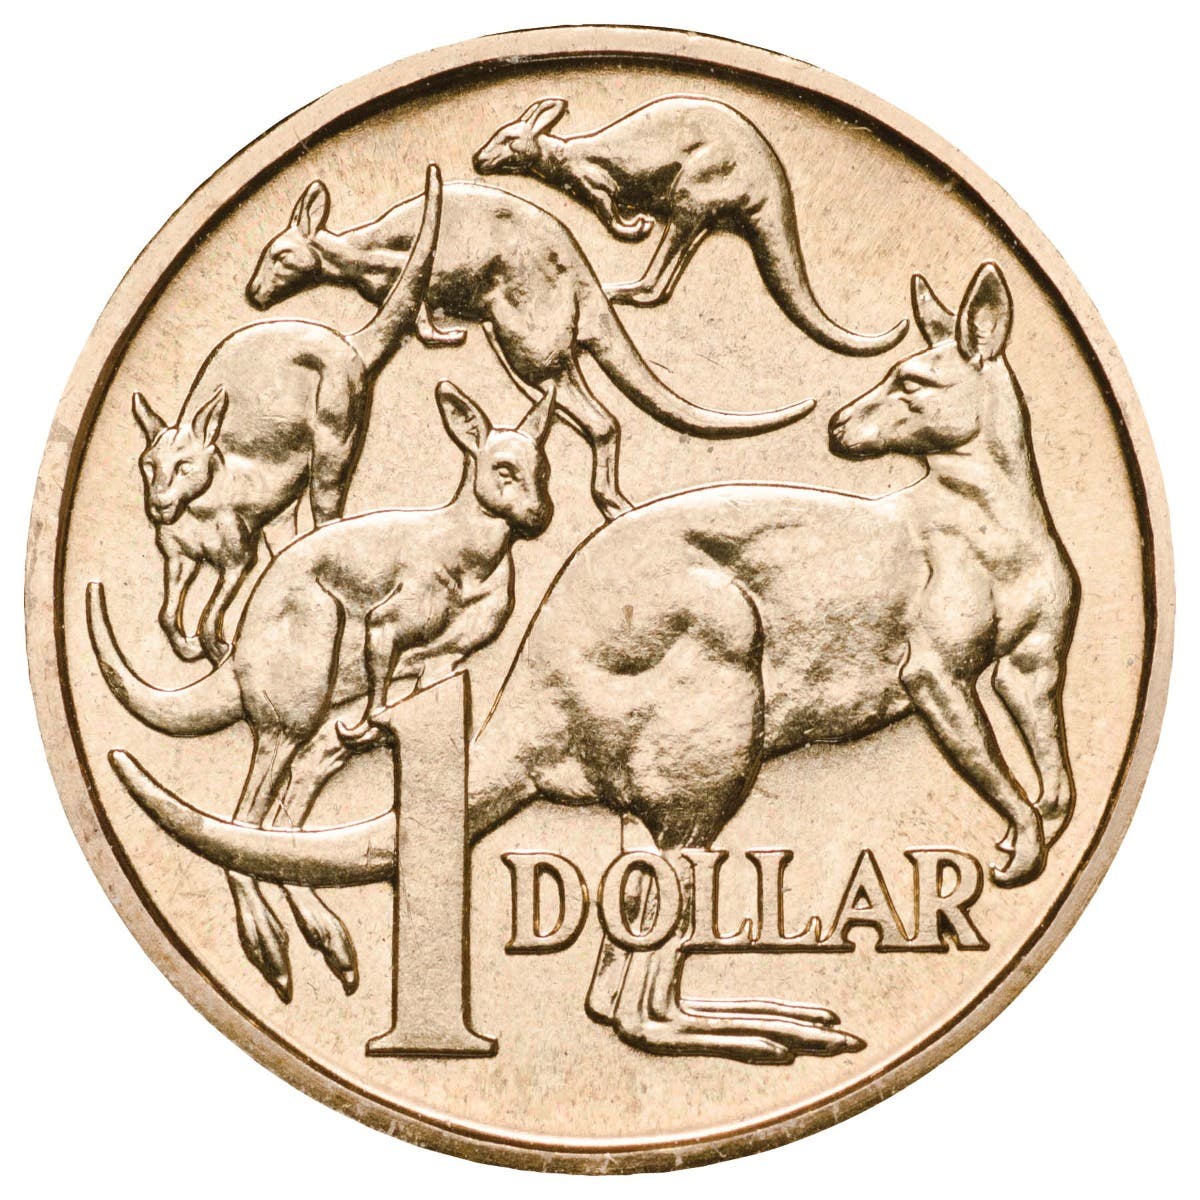 1984-1992 $1 Royal Australian Mint 5-Coin Pack Uncirculated